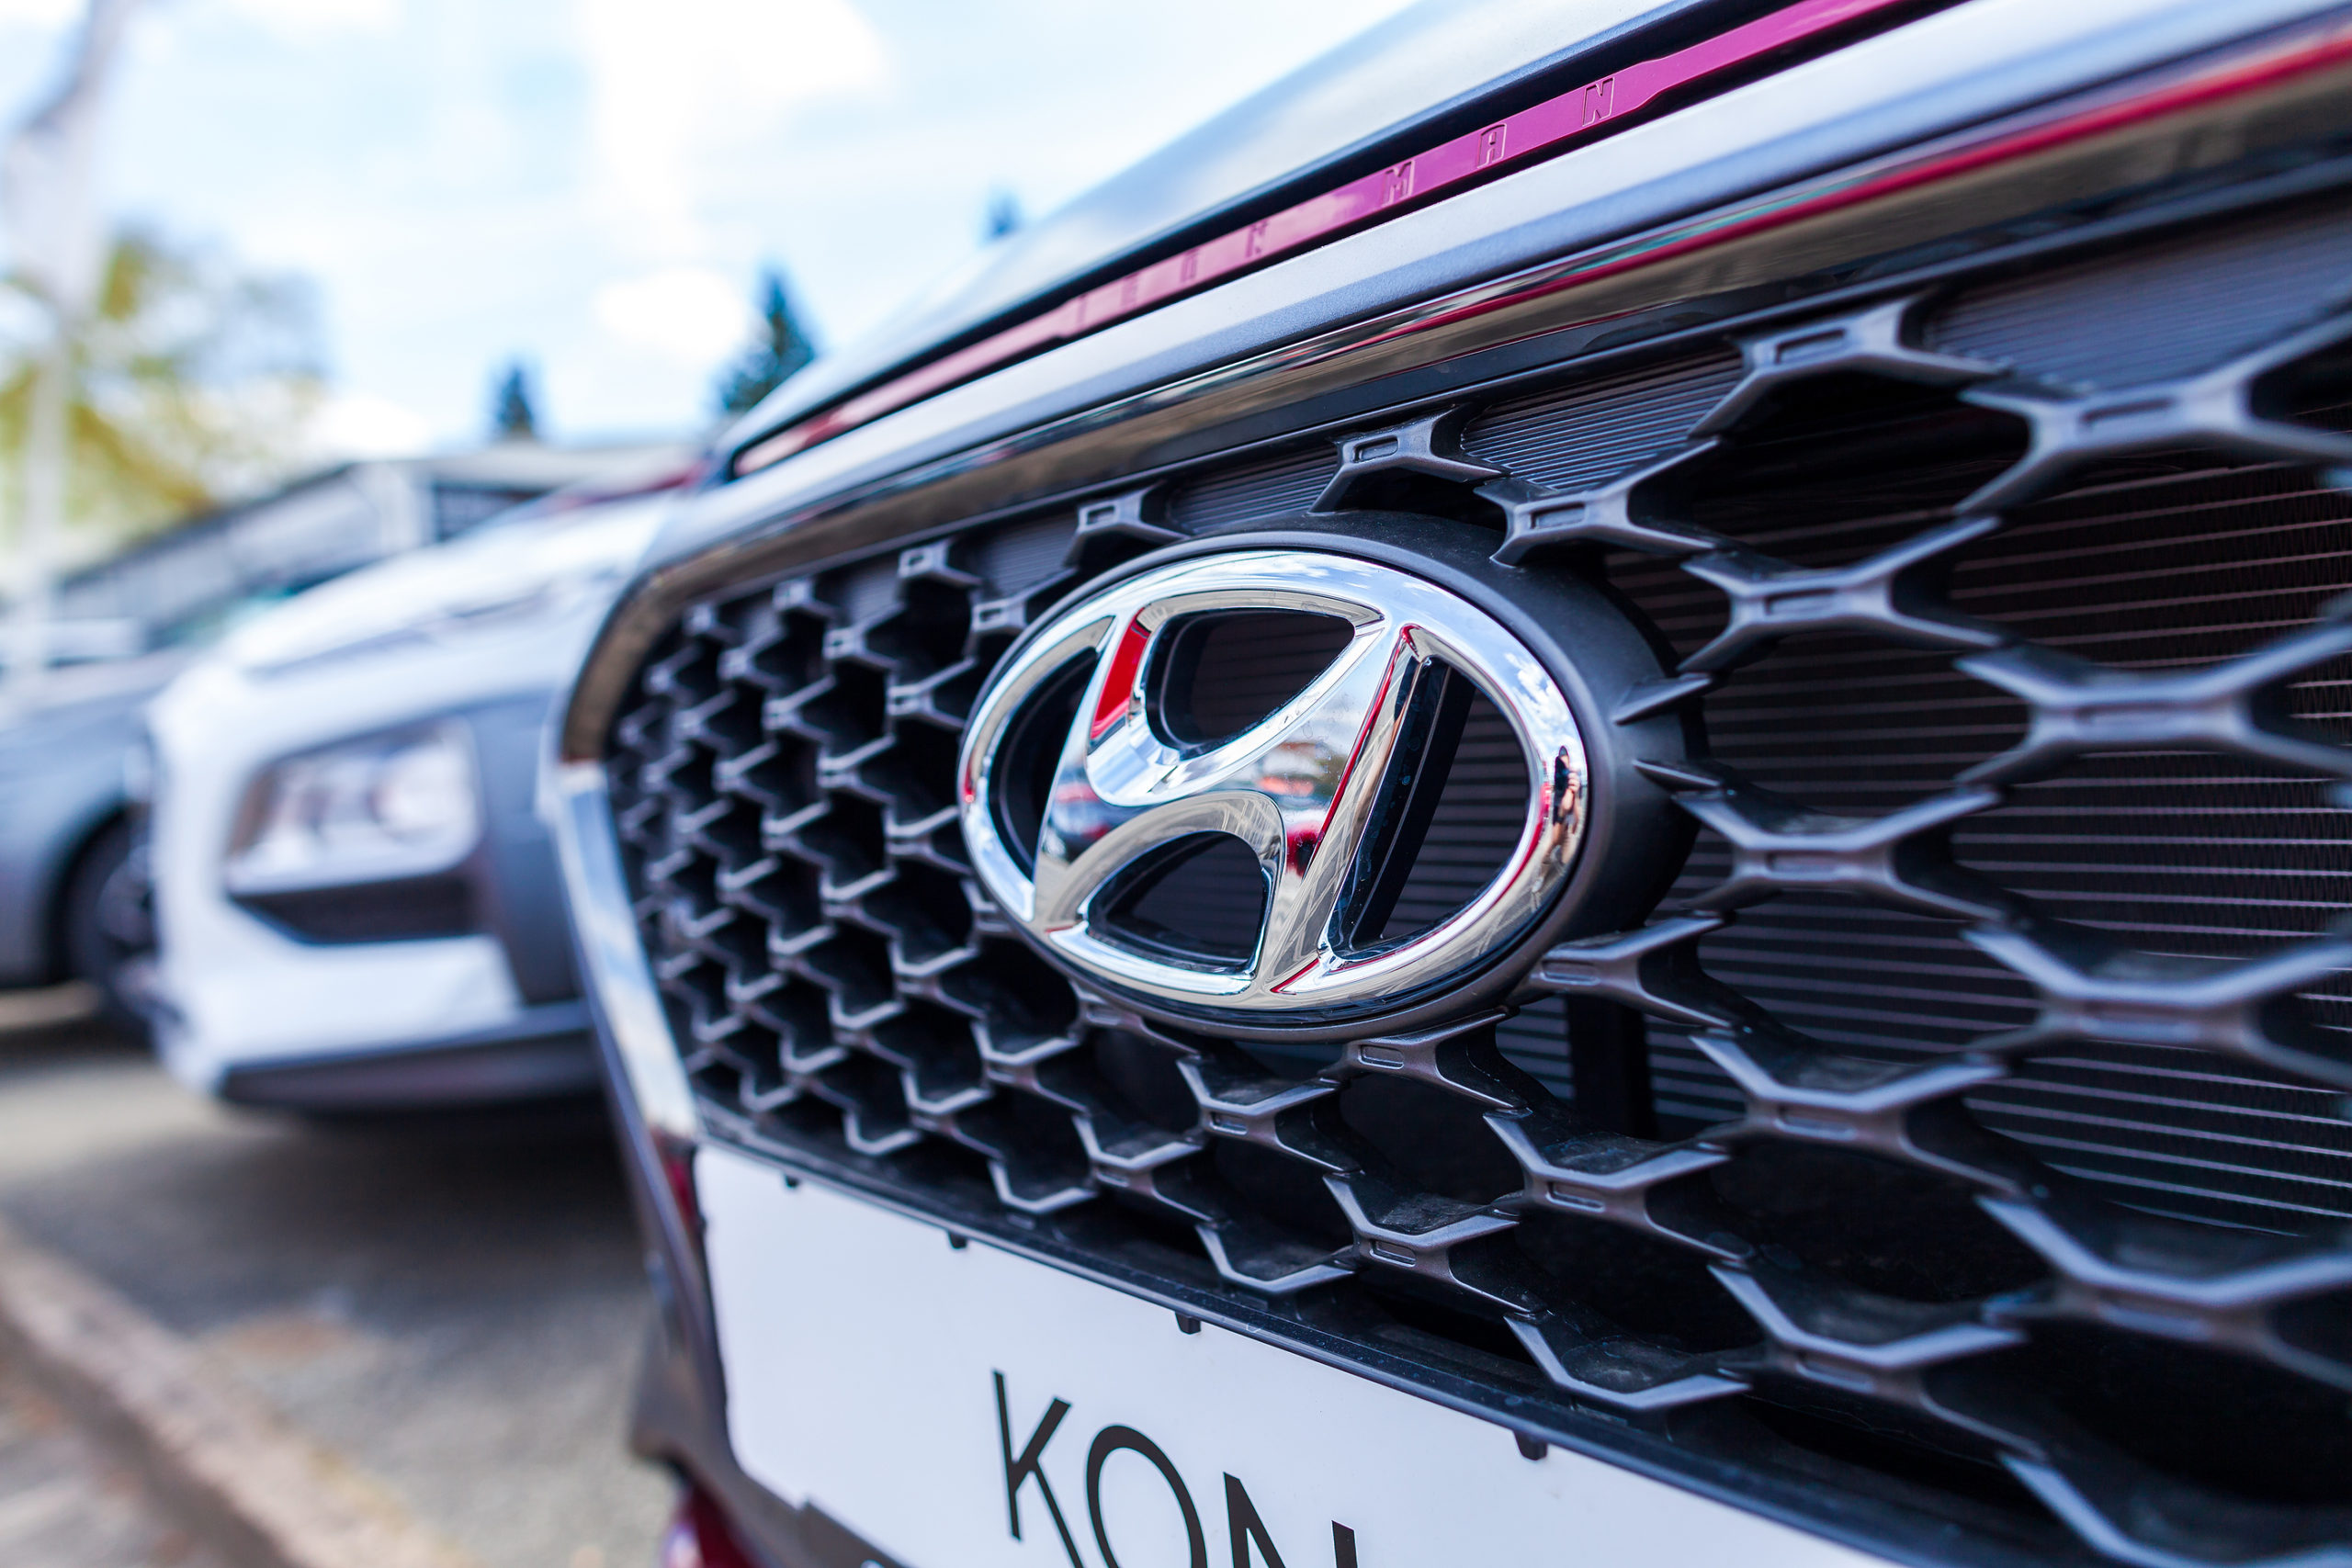 Kia, Hyundai Recall Over 3 Million Vehicles for Fire Risks